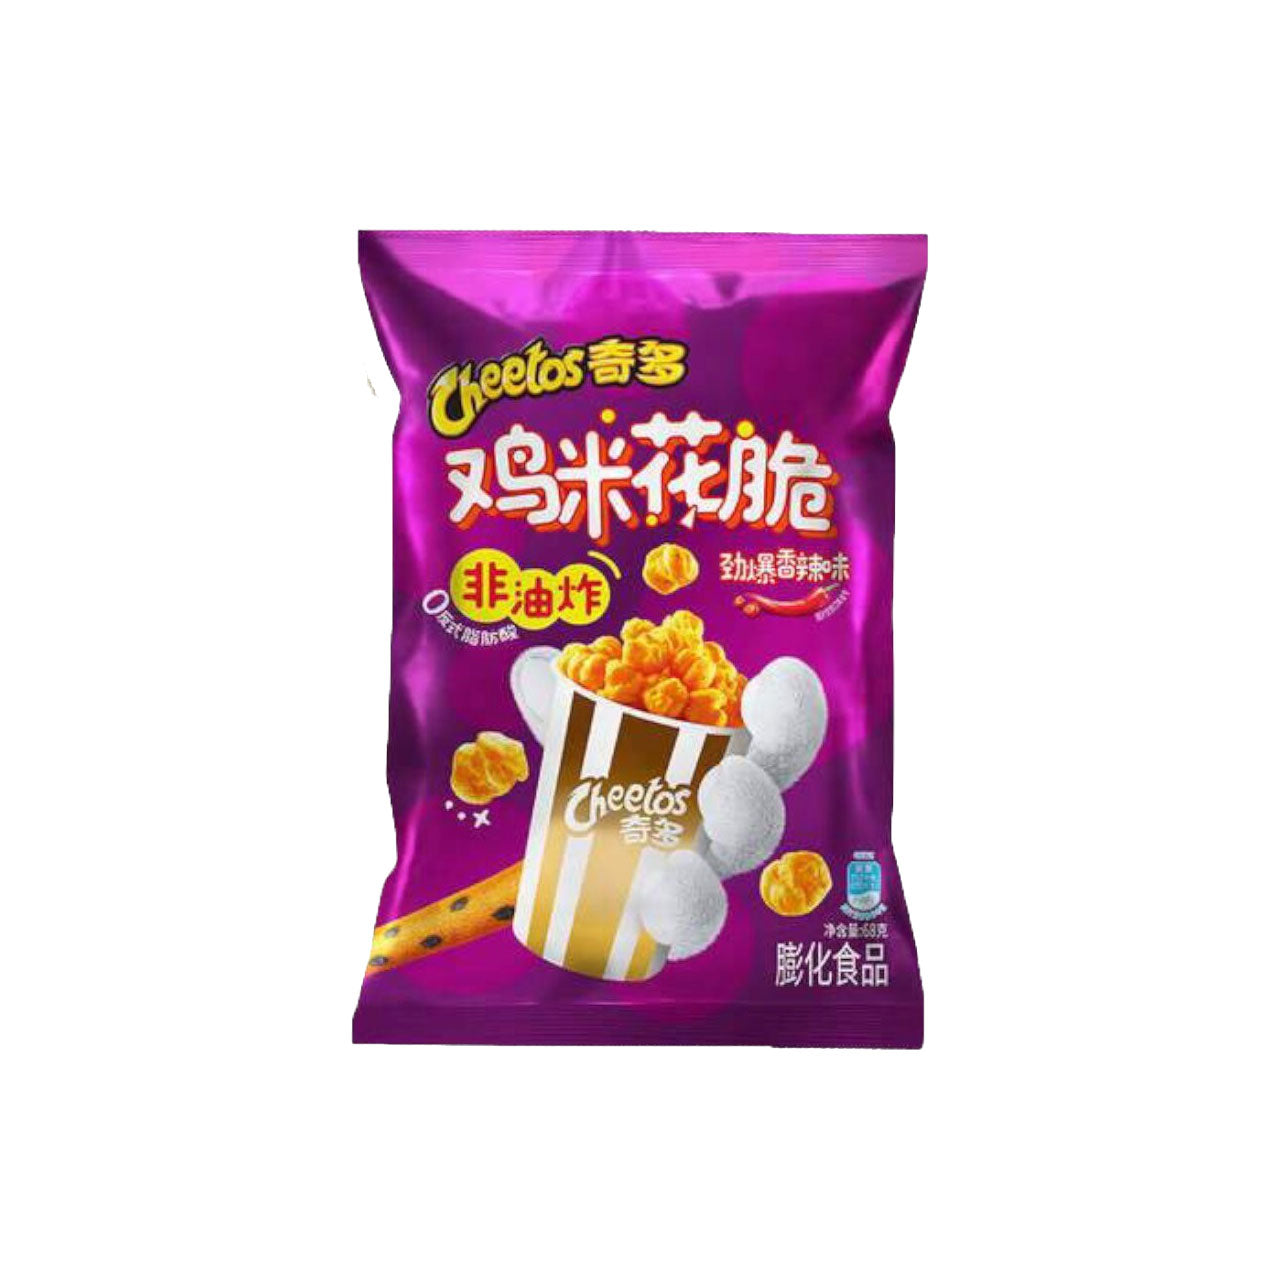 Japan Cheetos - Purple